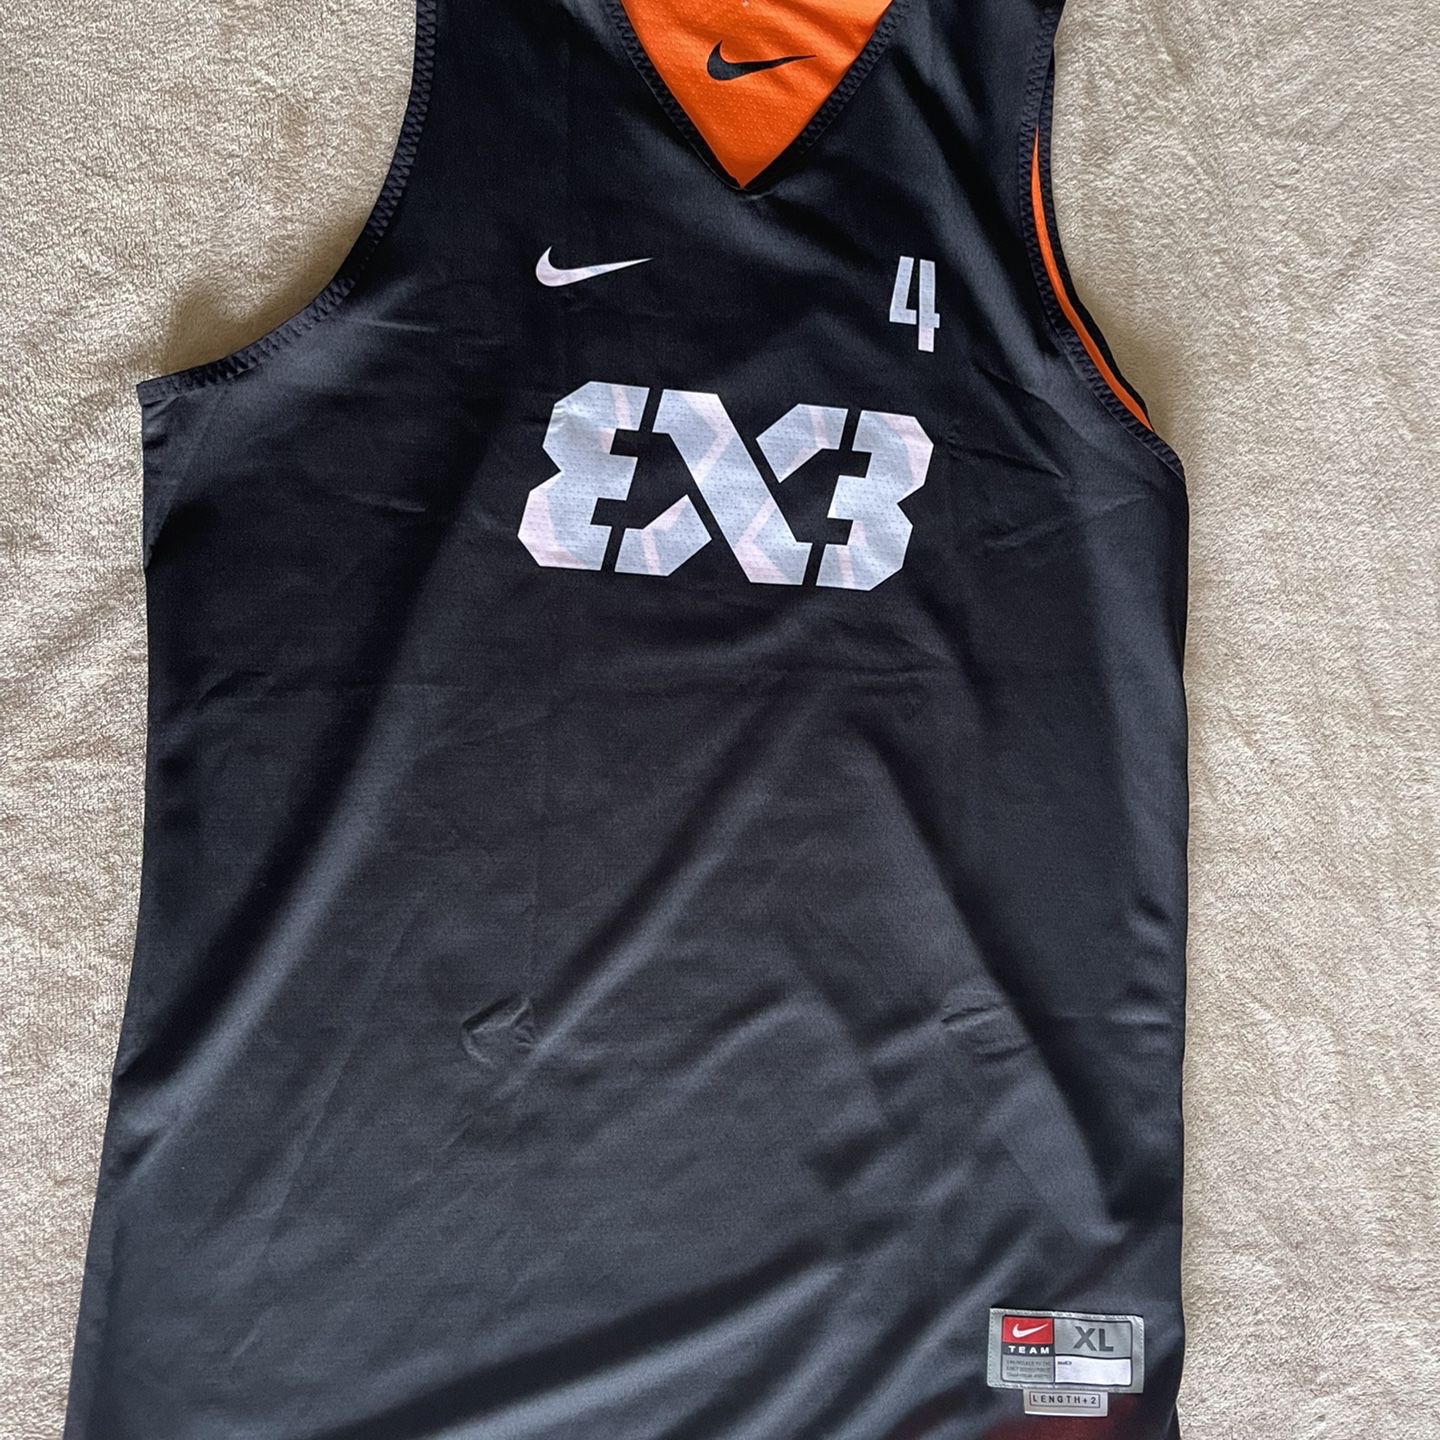 Nike FIBA 3x3 Reversible Basketball Jerseys #4 Orange Black Size